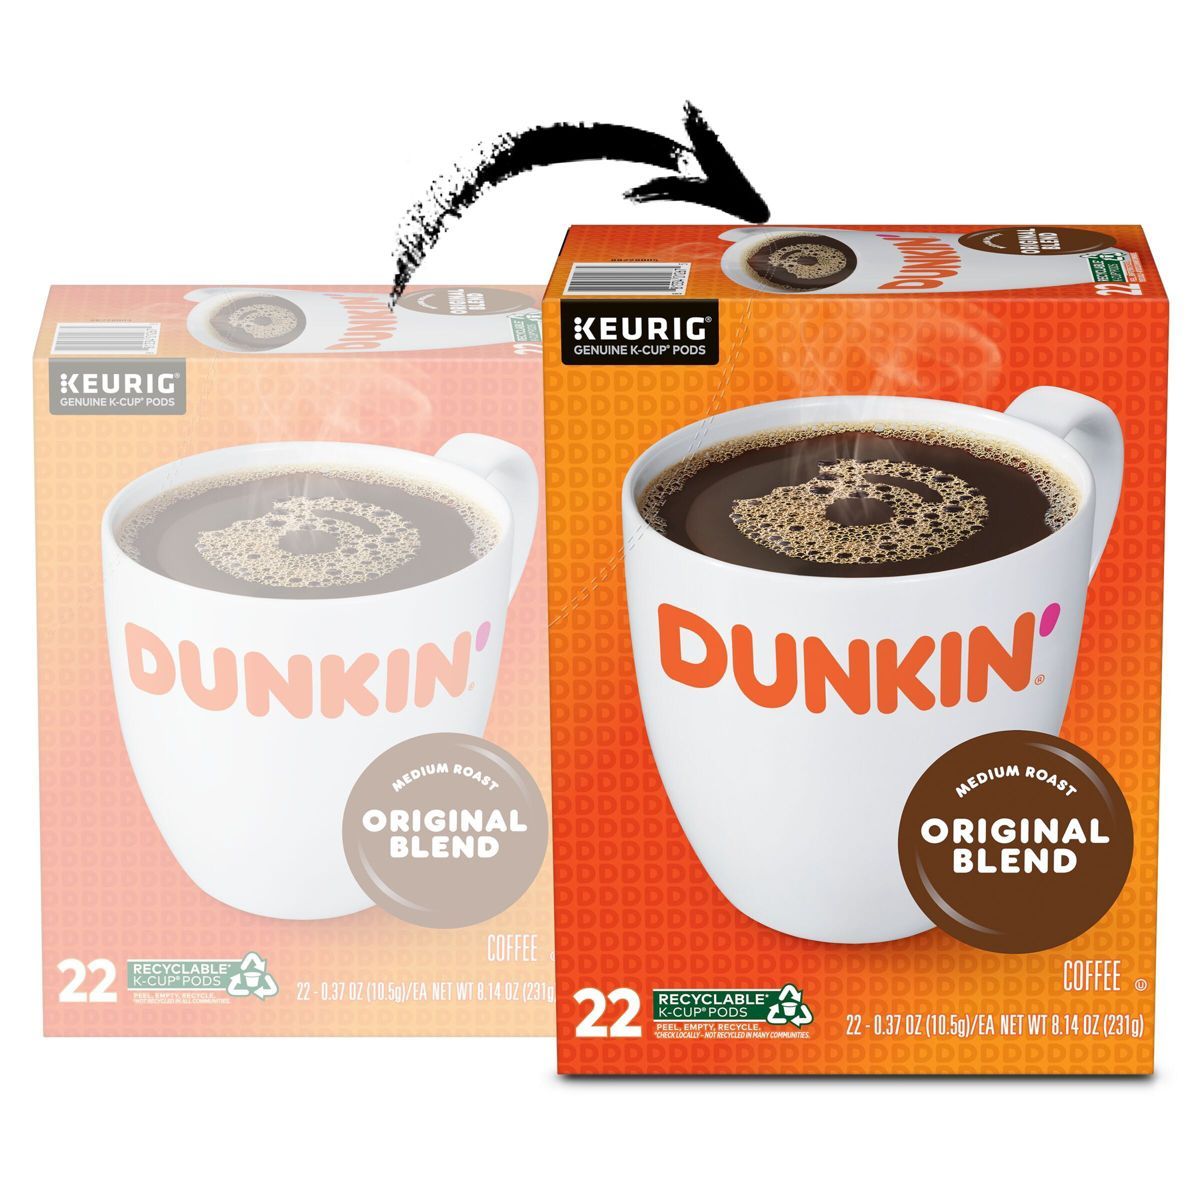 Dunkin' Original Blend, Medium Roast Coffee | Target